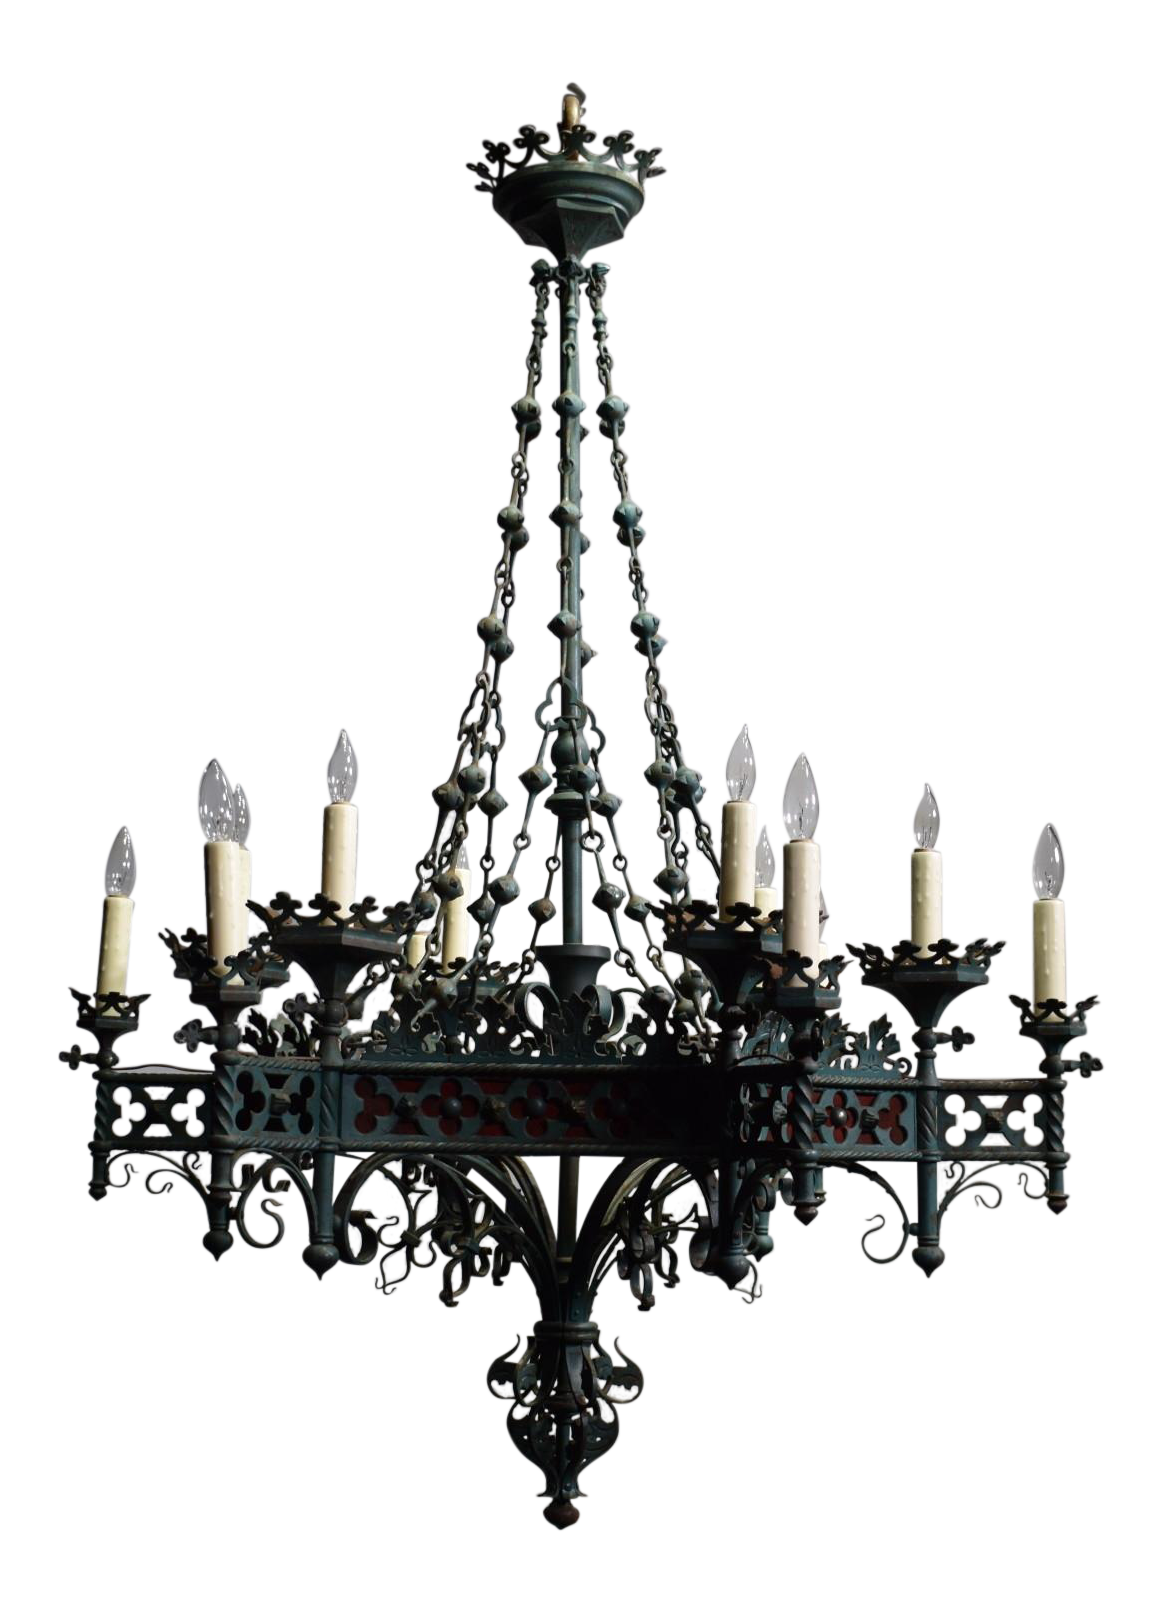 spooky clipart chandelier